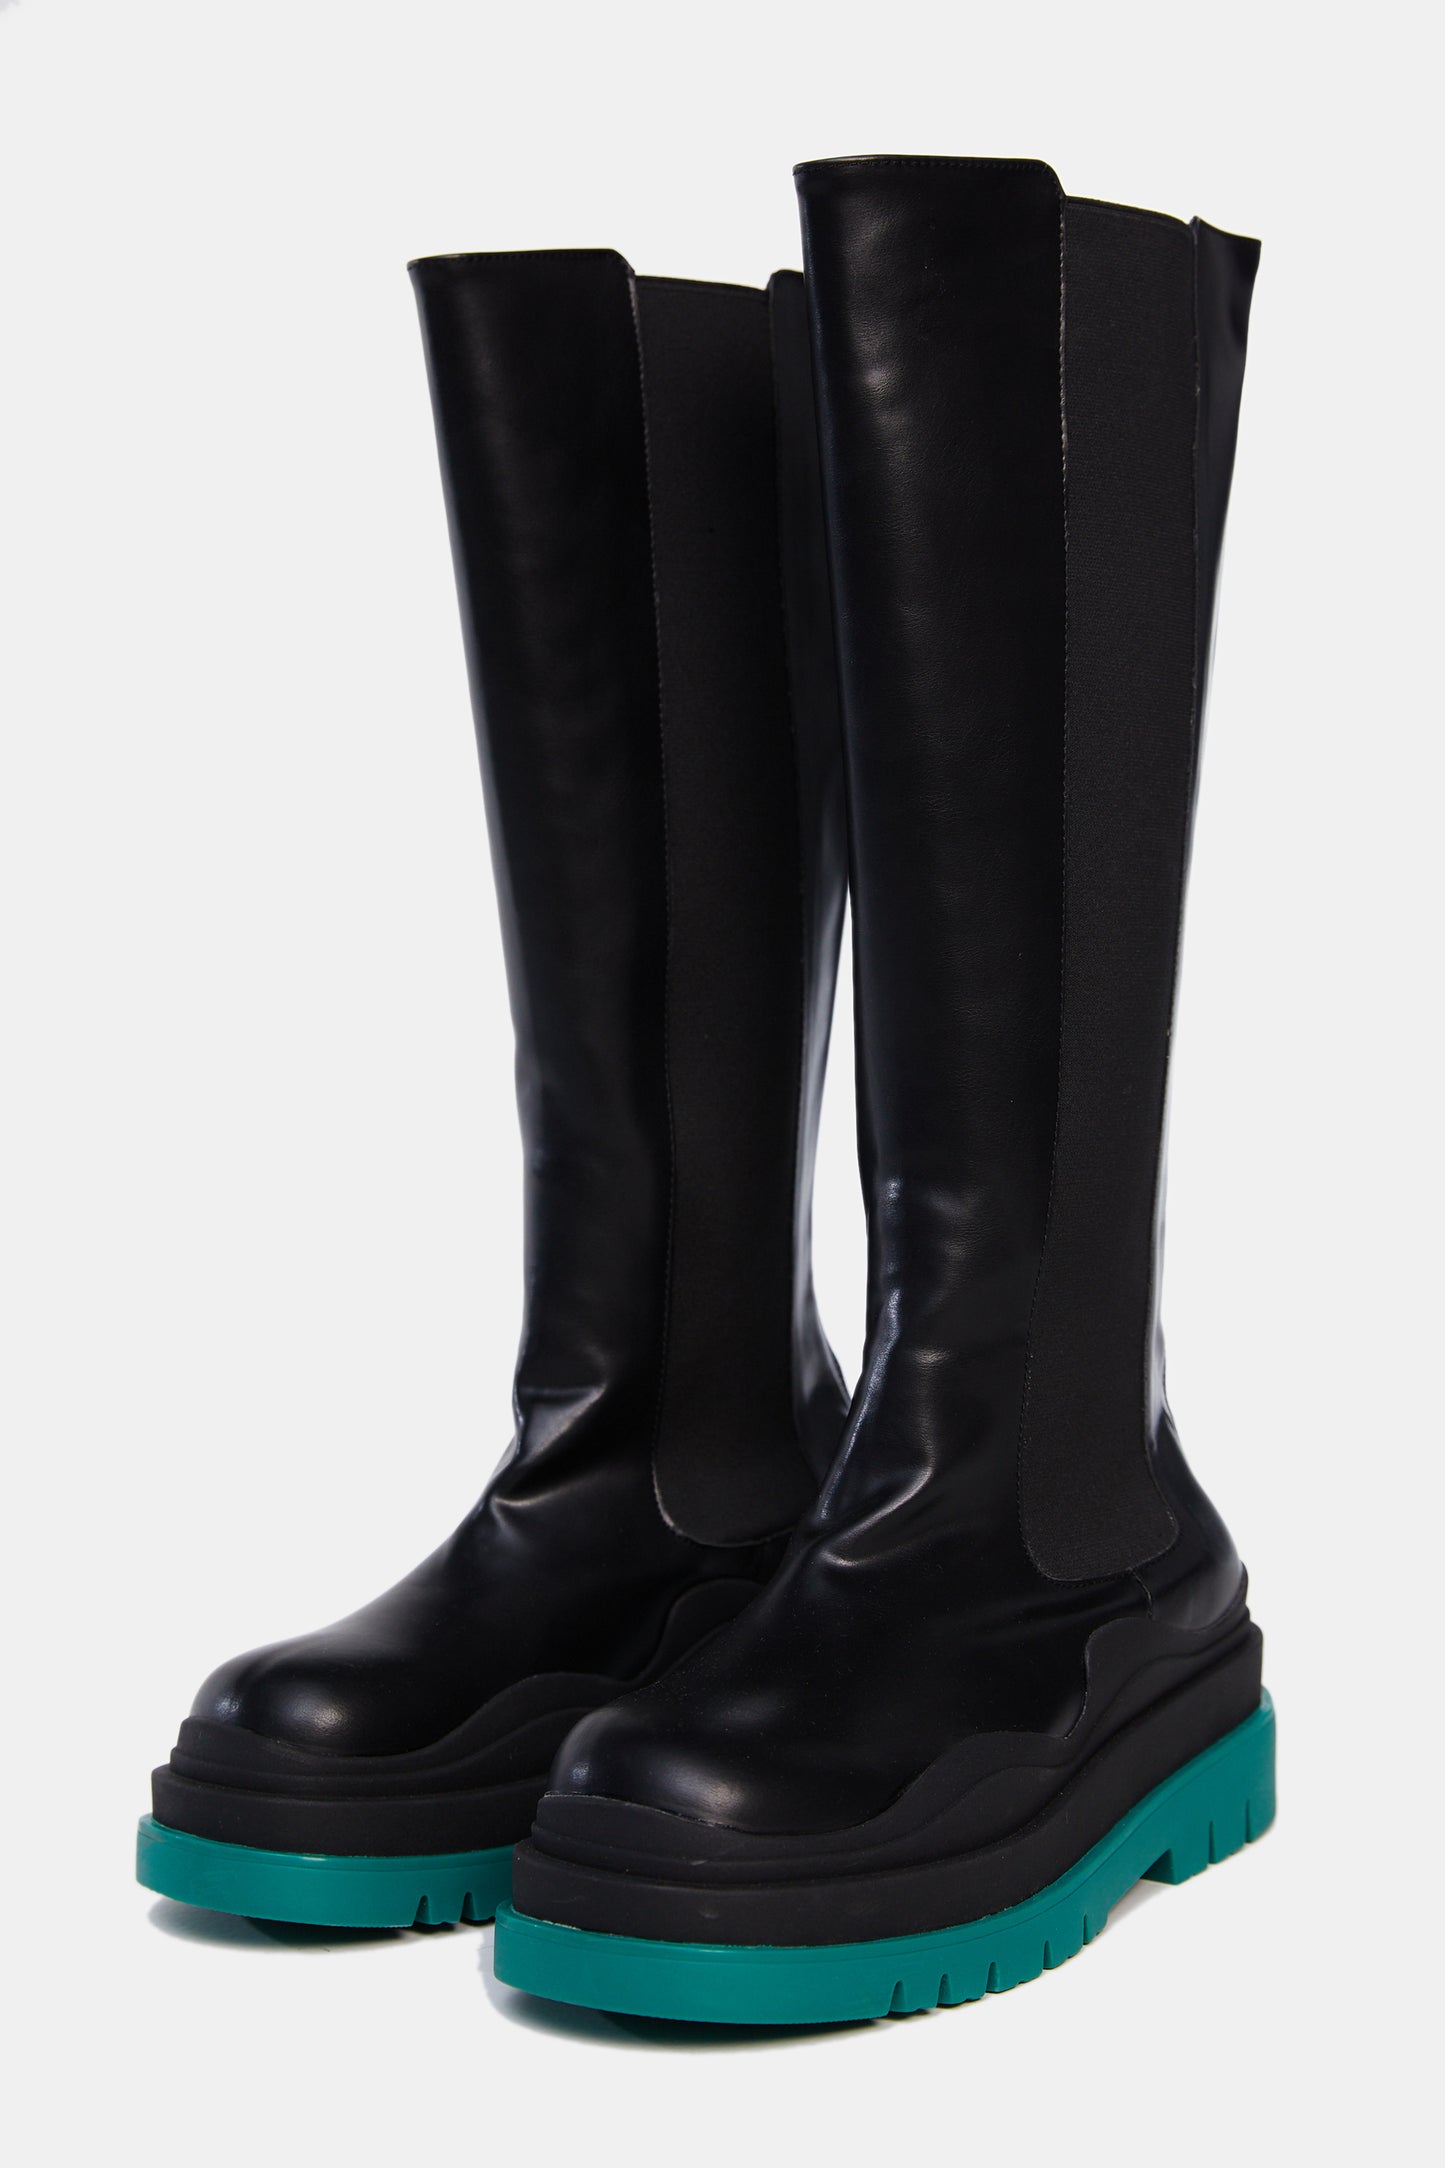 Lug Sole High Knee Boots, Turquoise & Black